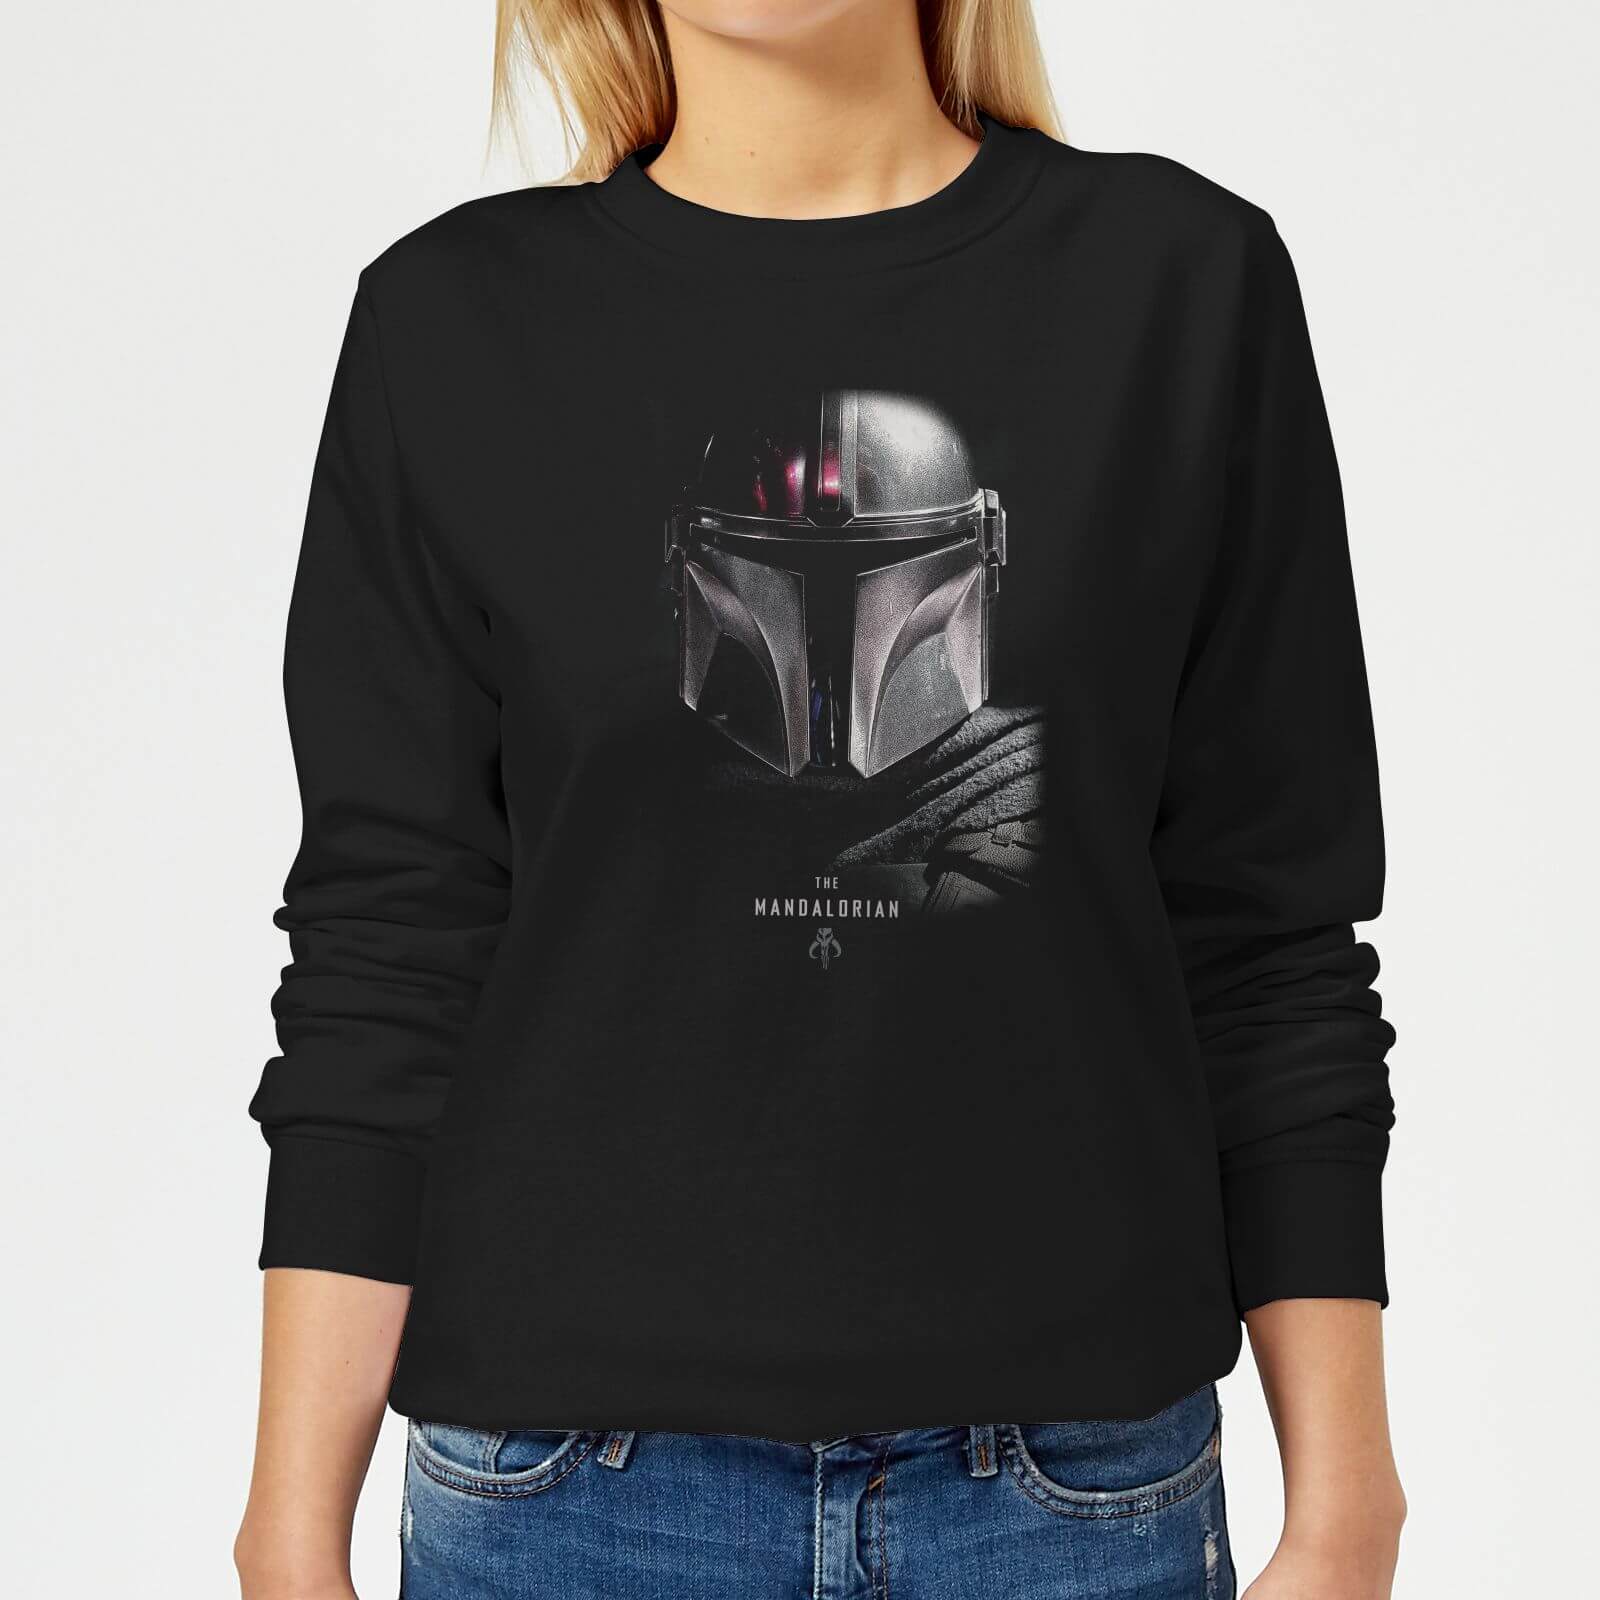 The Mandalorian Poster Women's Sweatshirt - Black - XL